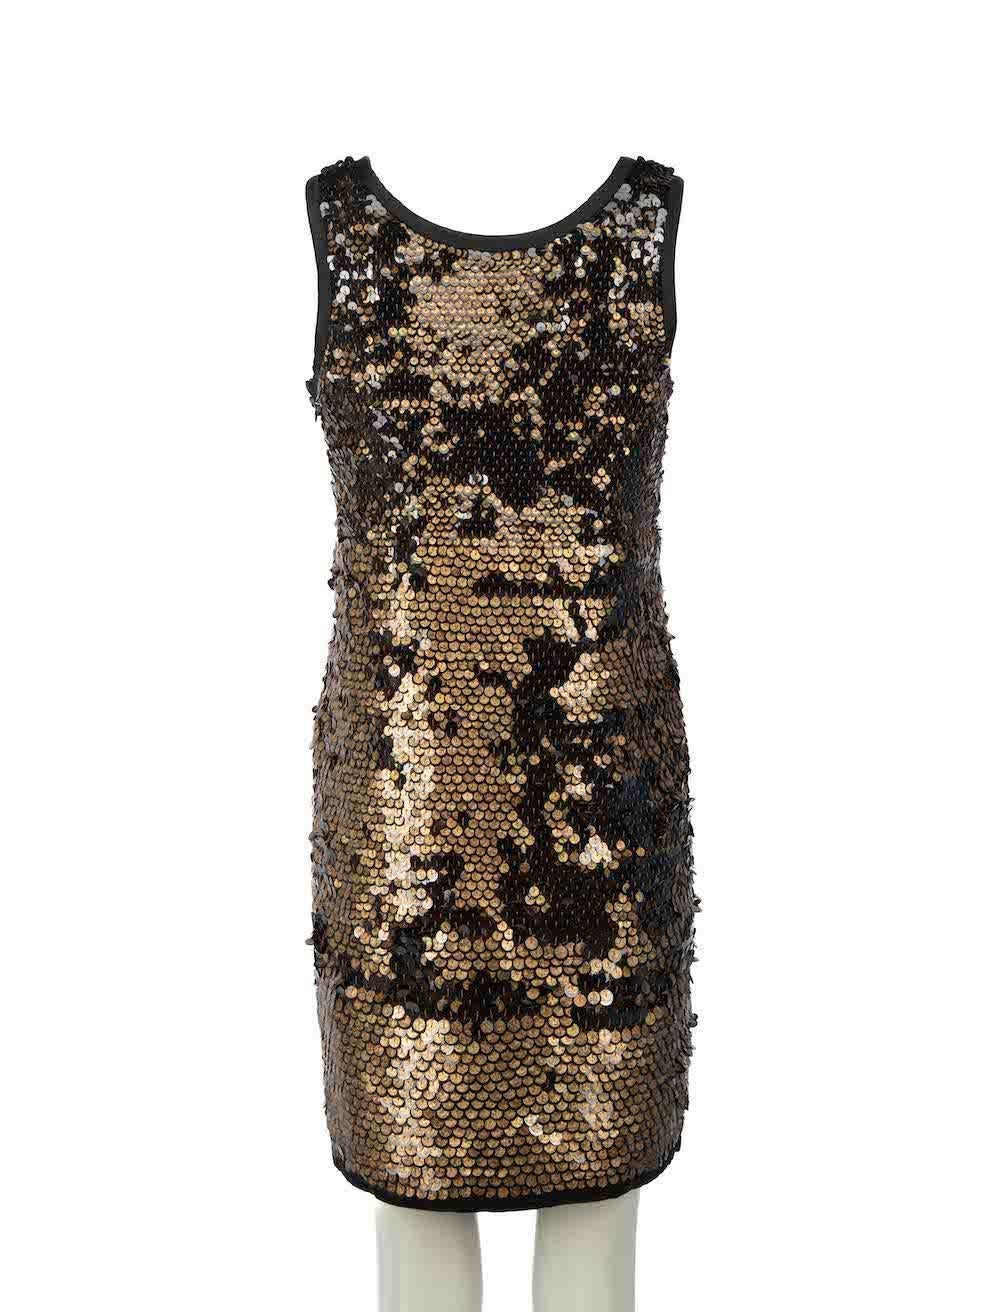 Diane Von Furstenberg Black & Gold Sequin Mini Dress Size XS In Excellent Condition For Sale In London, GB